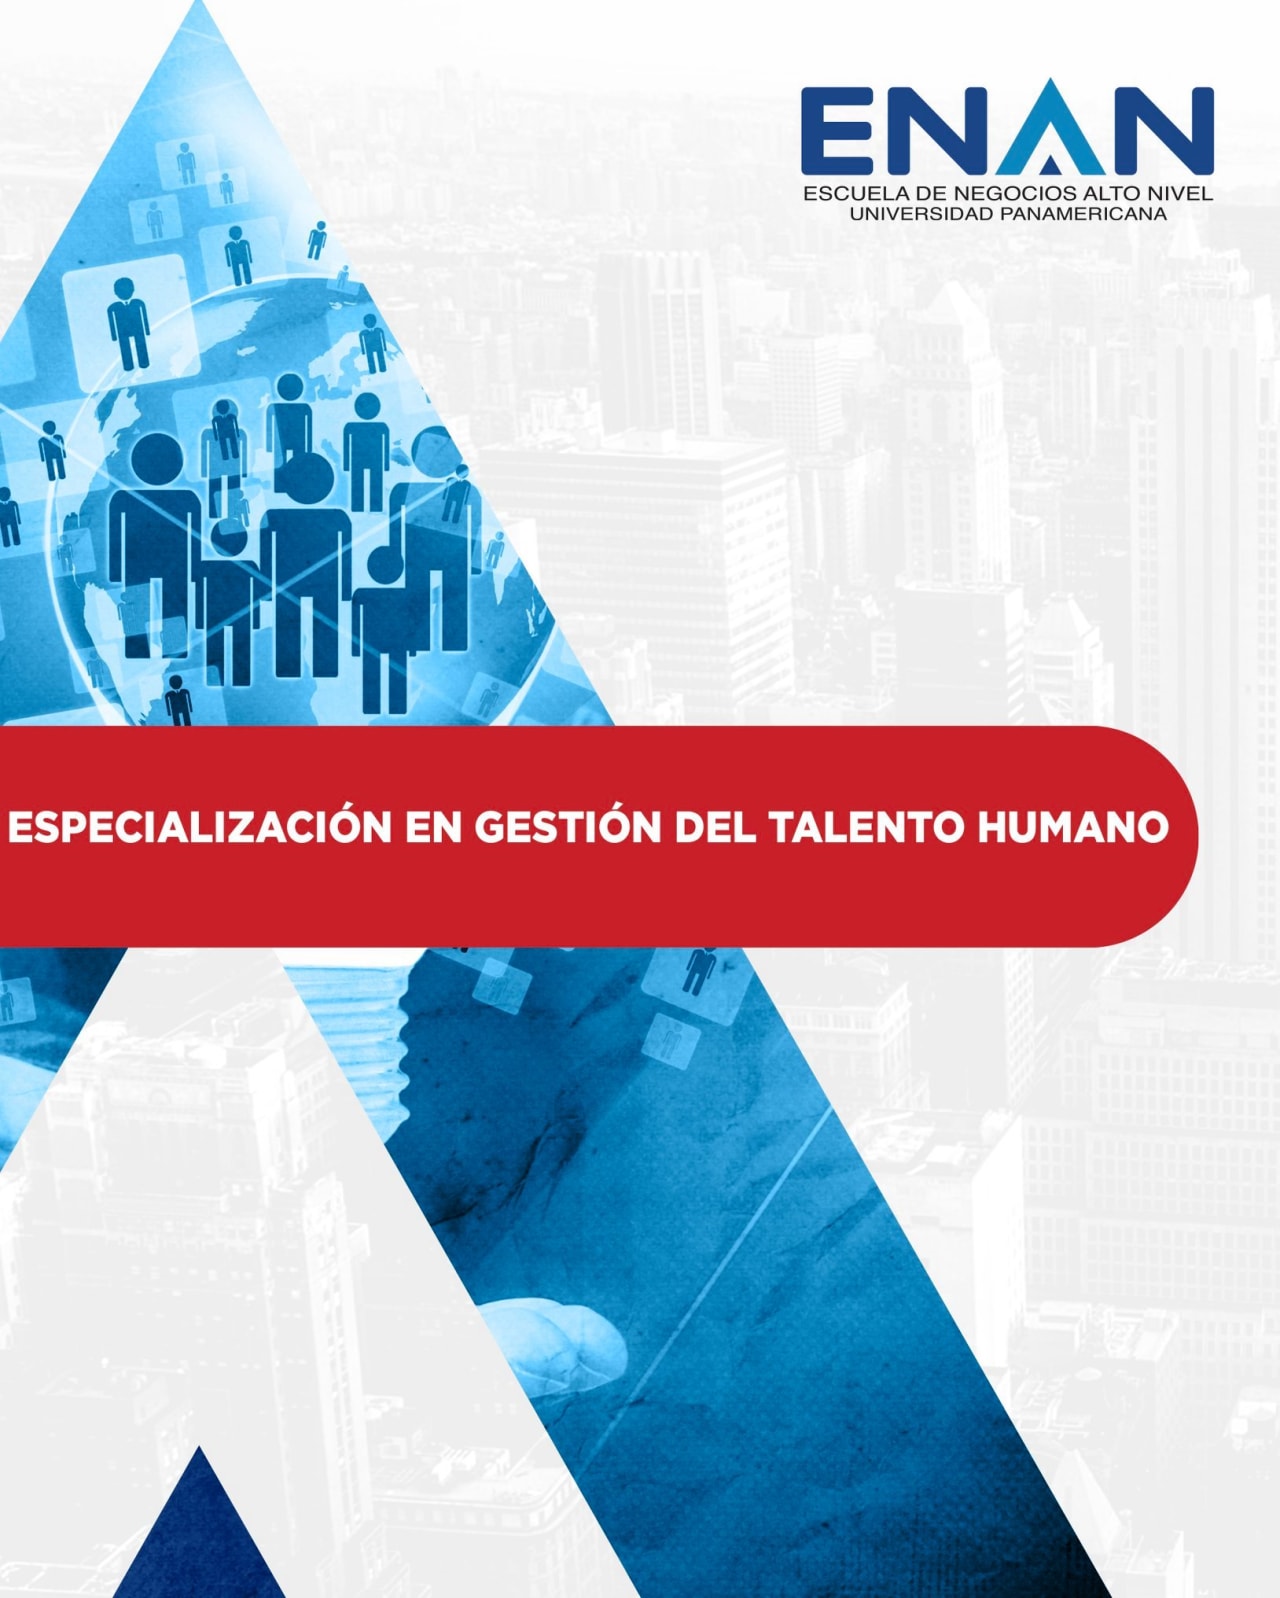 Escuela de Negocios Alto Nivel - Universidad Panamericana de Guatemala Spezialisierung auf Human Talent Management